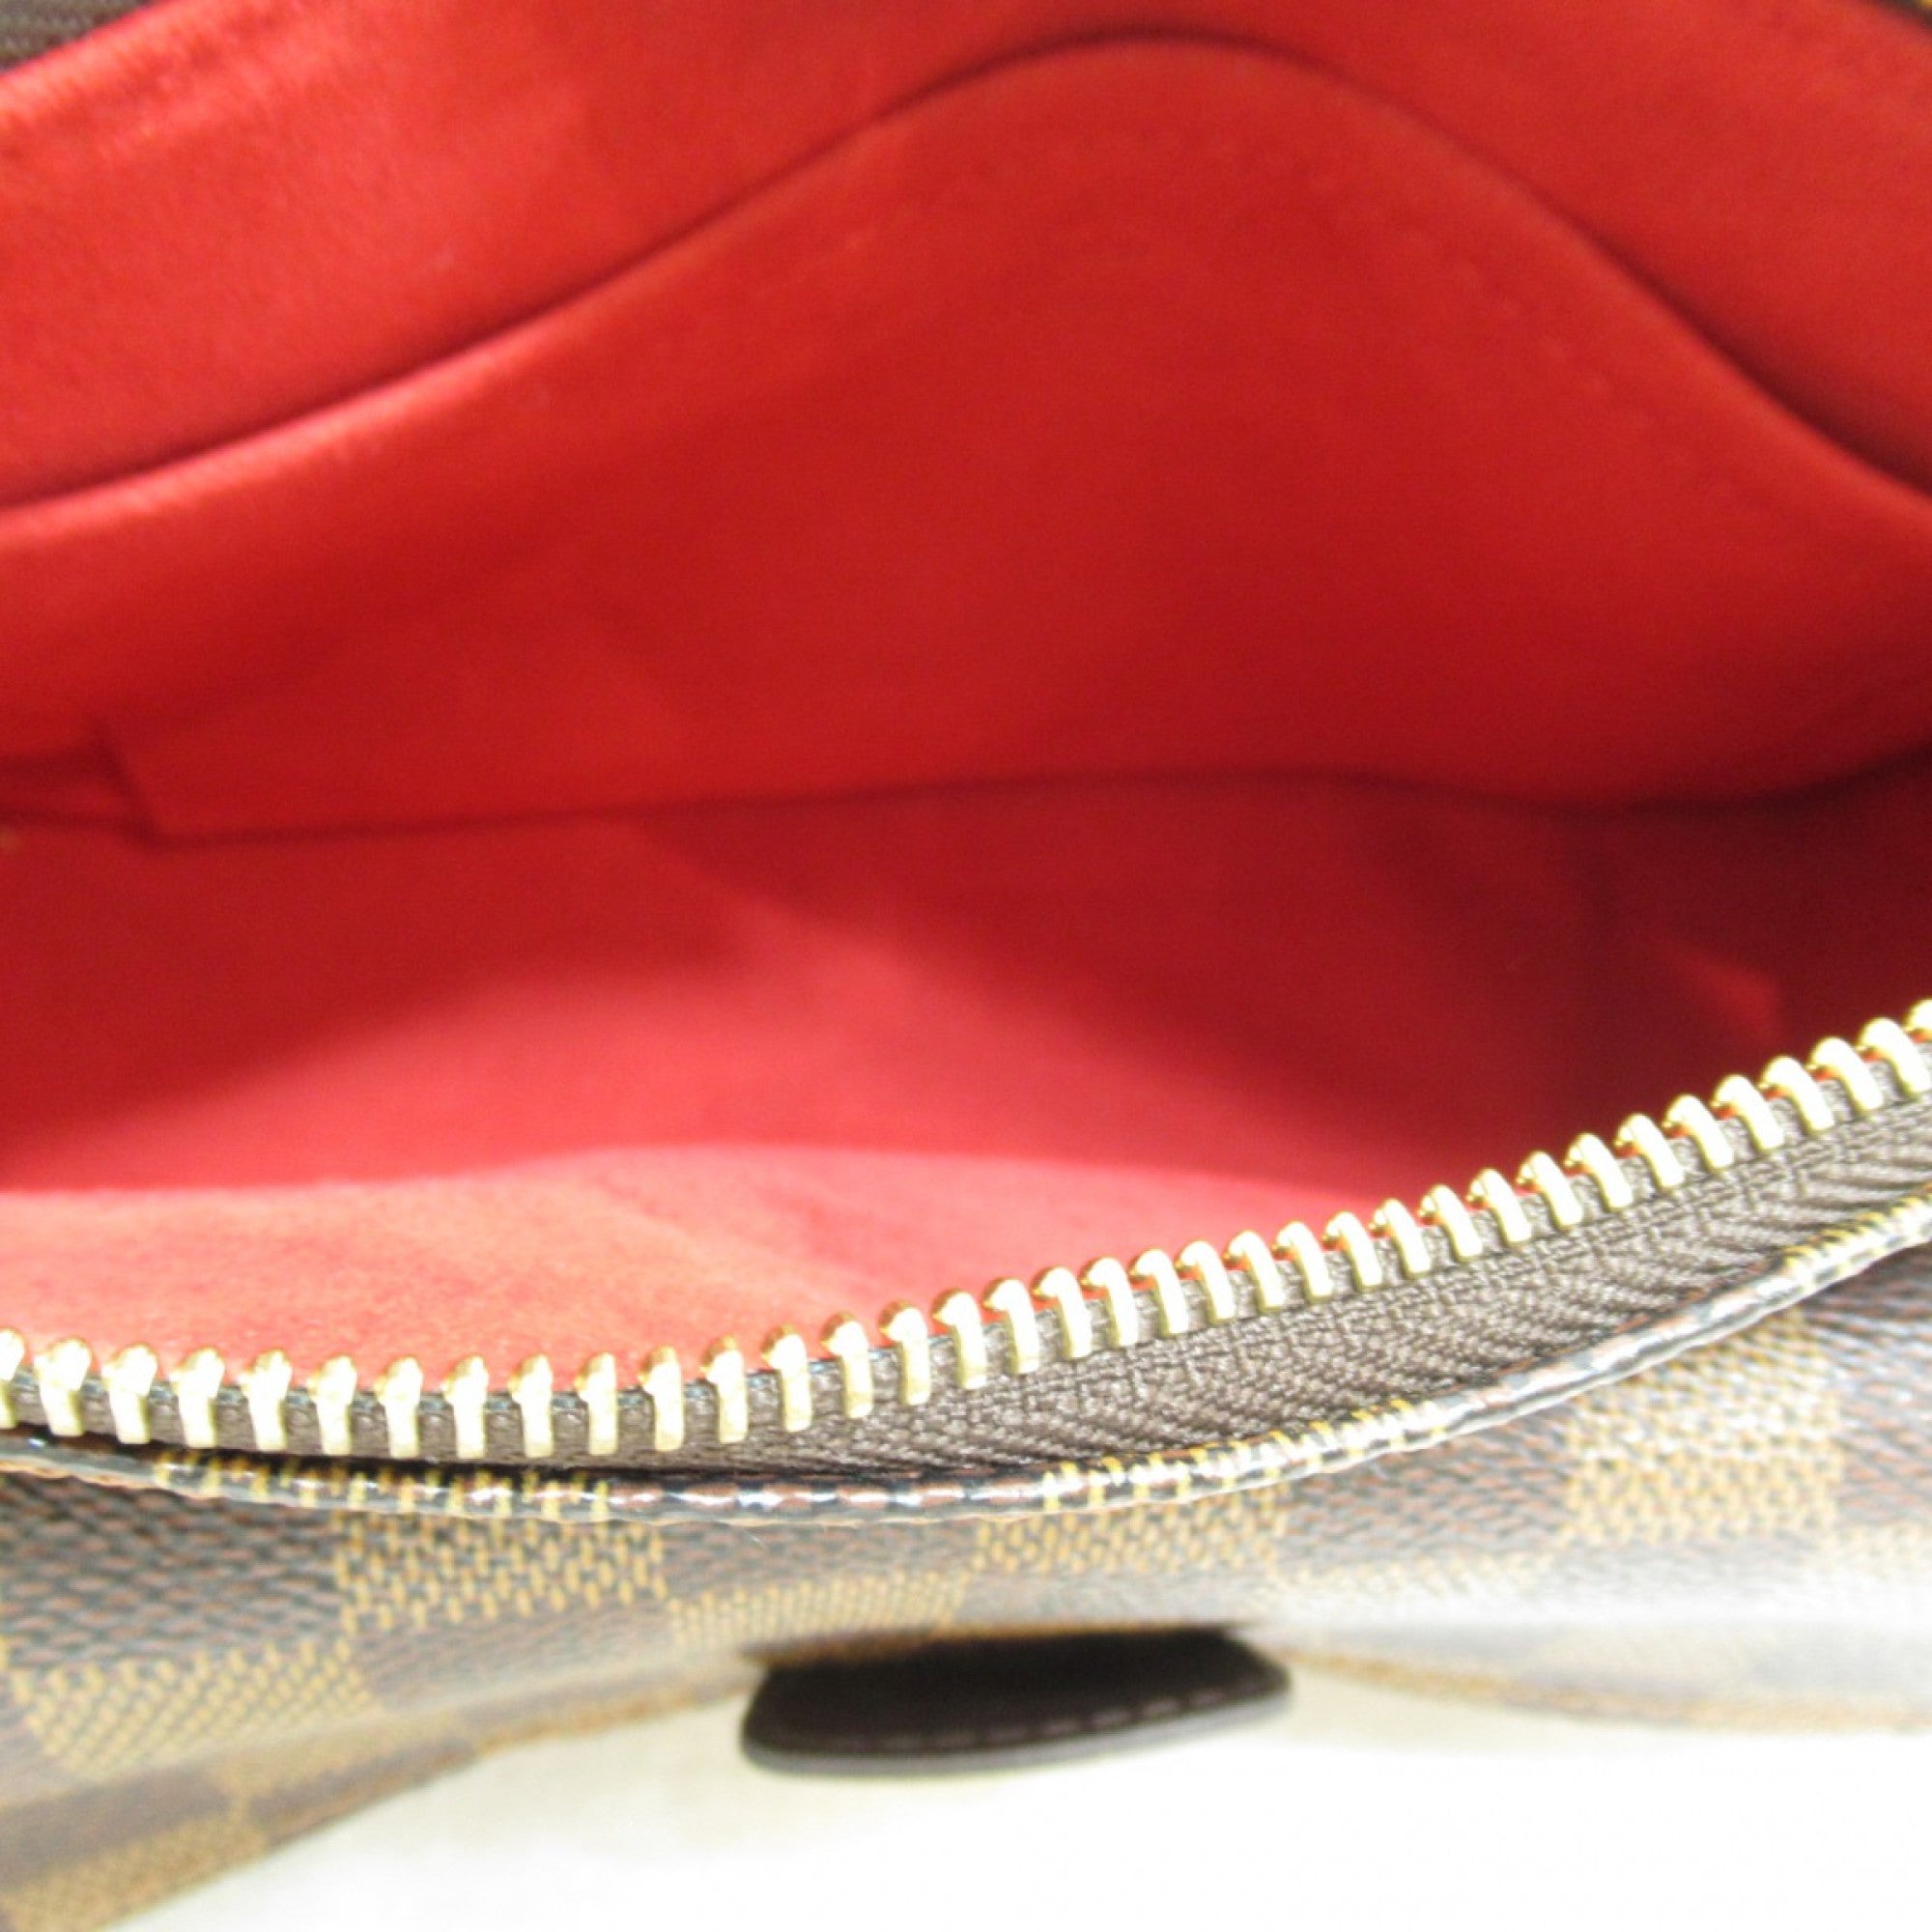 Ravello GM, Used & Preloved Louis Vuitton Shoulder Bag, LXR USA, Brown